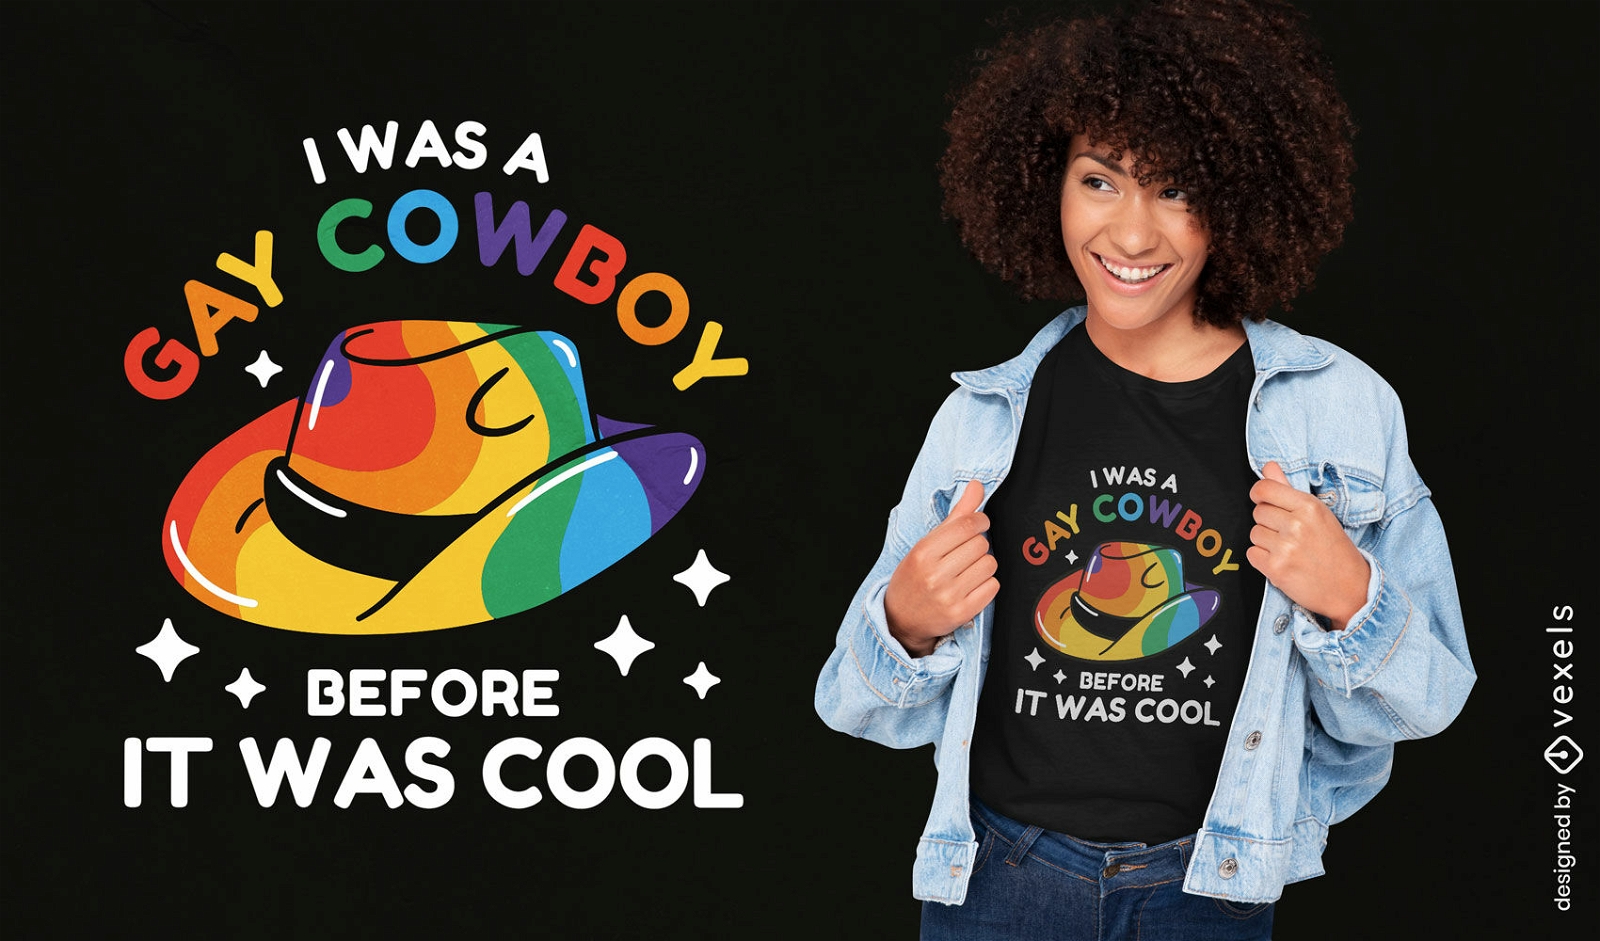 Pride cowboy quote t-shirt design